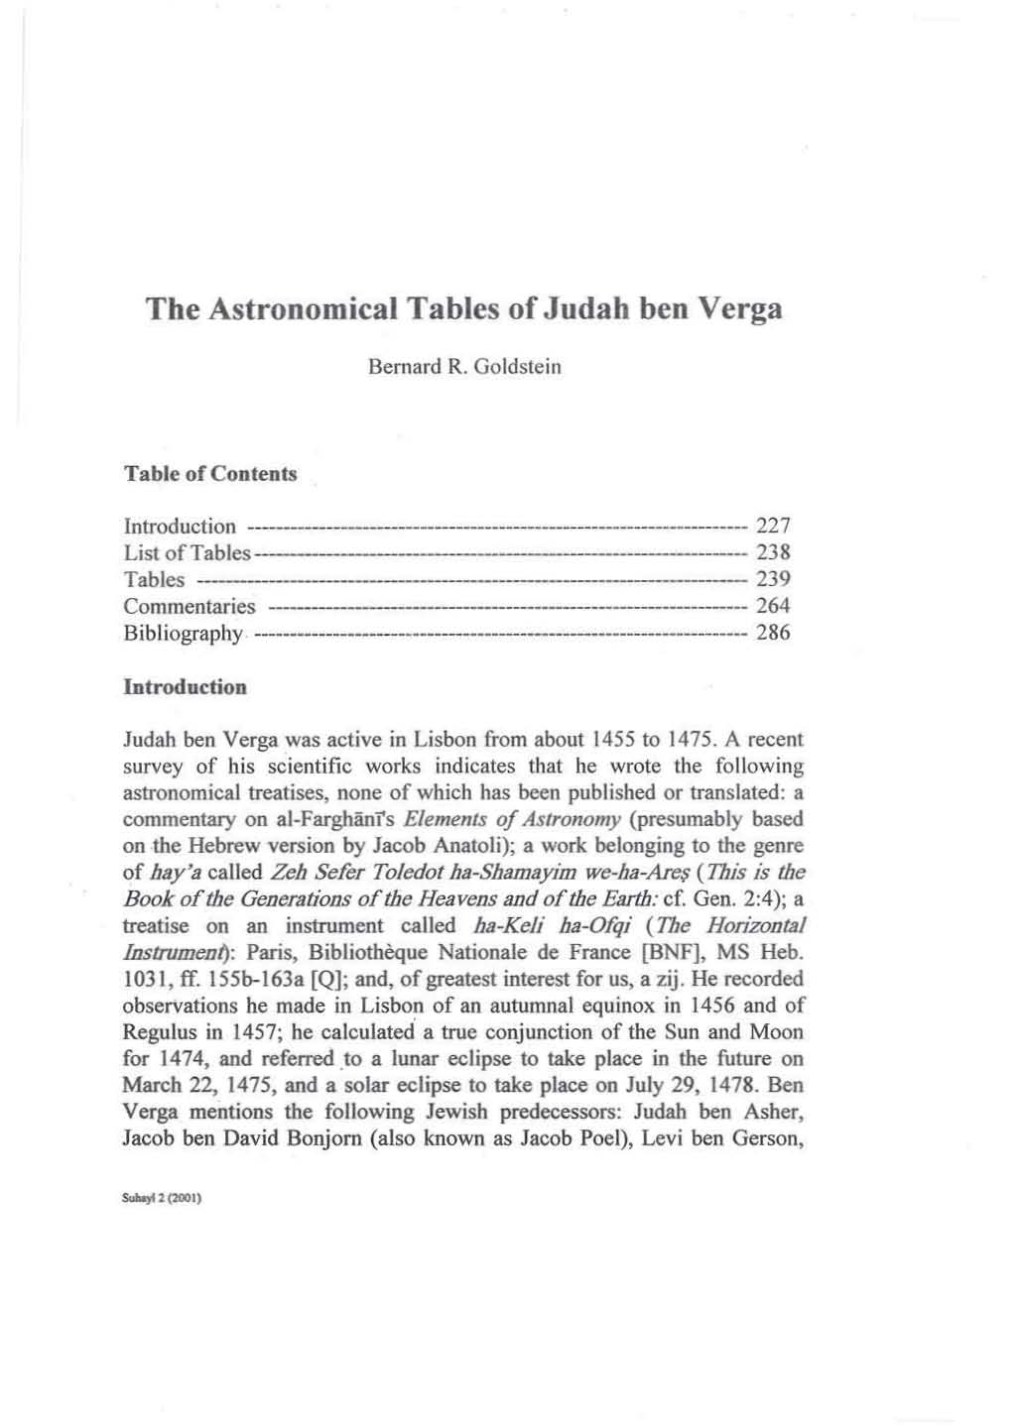 The Astronomical Tables of Judah Ben Verga